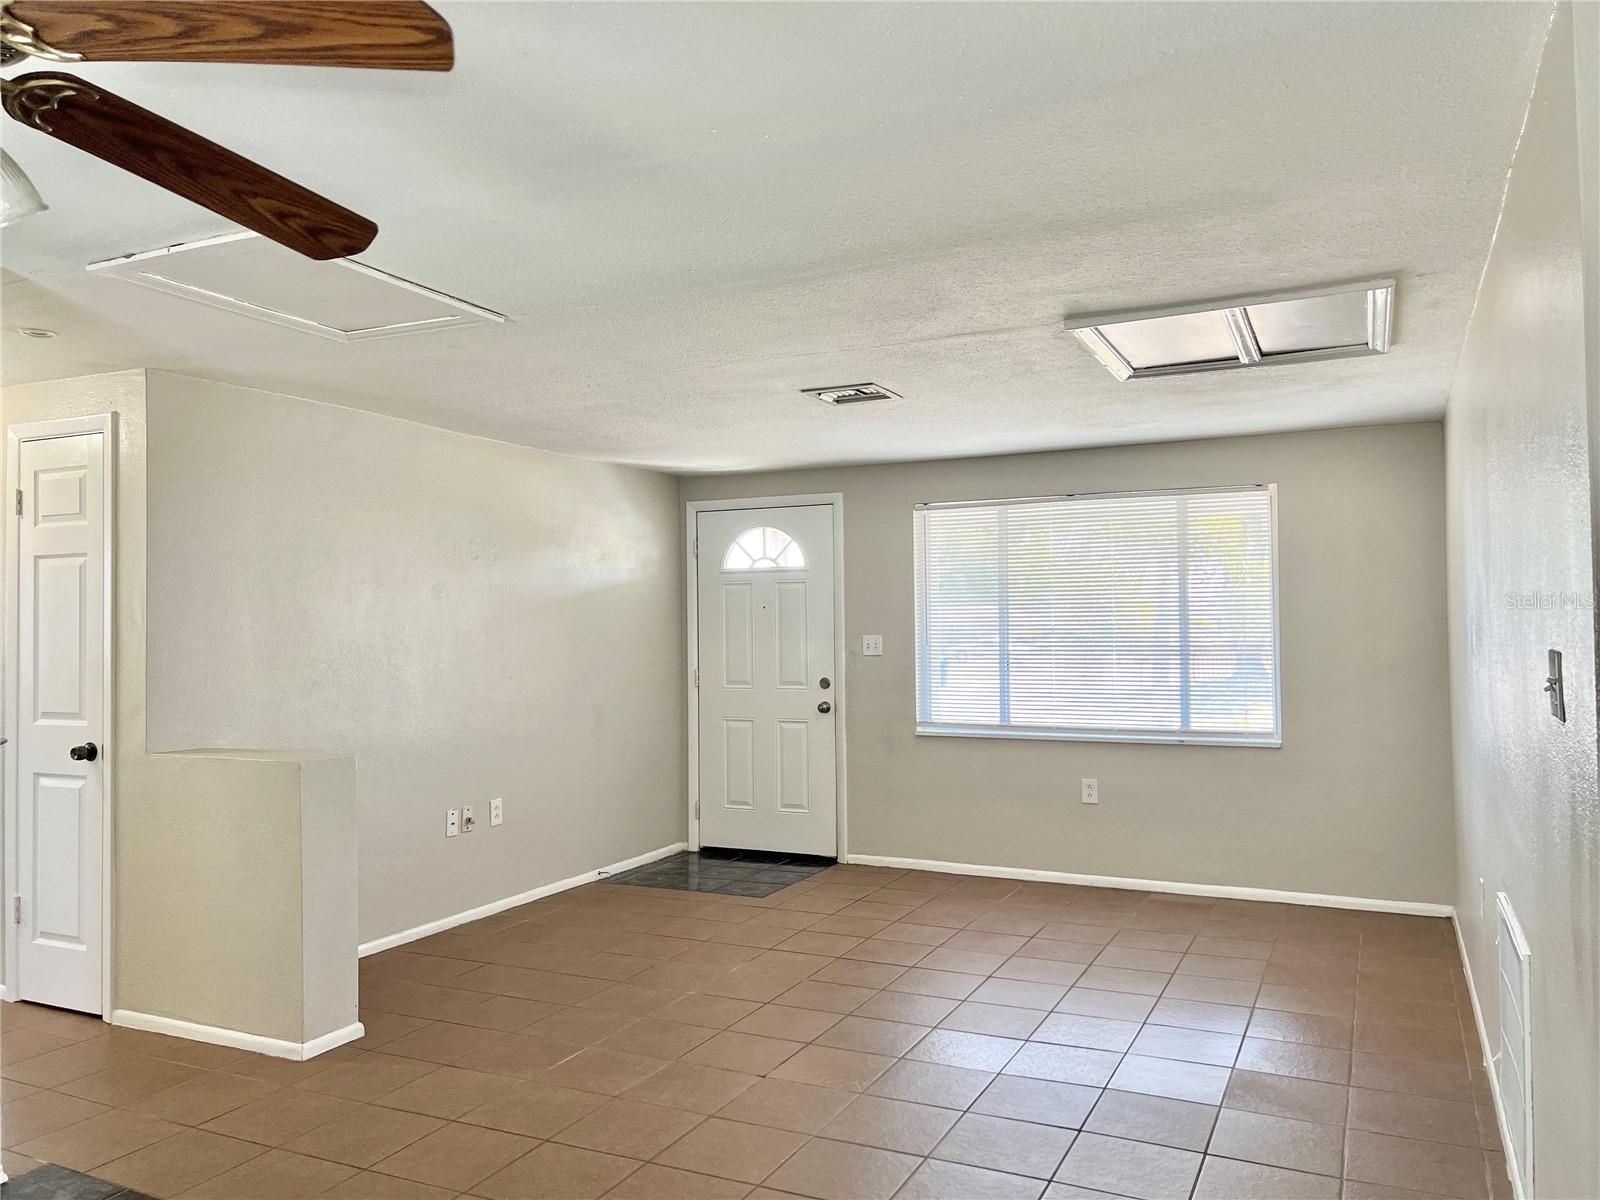 Living Area - Ceramic Tile Floors and Ceiling Fan